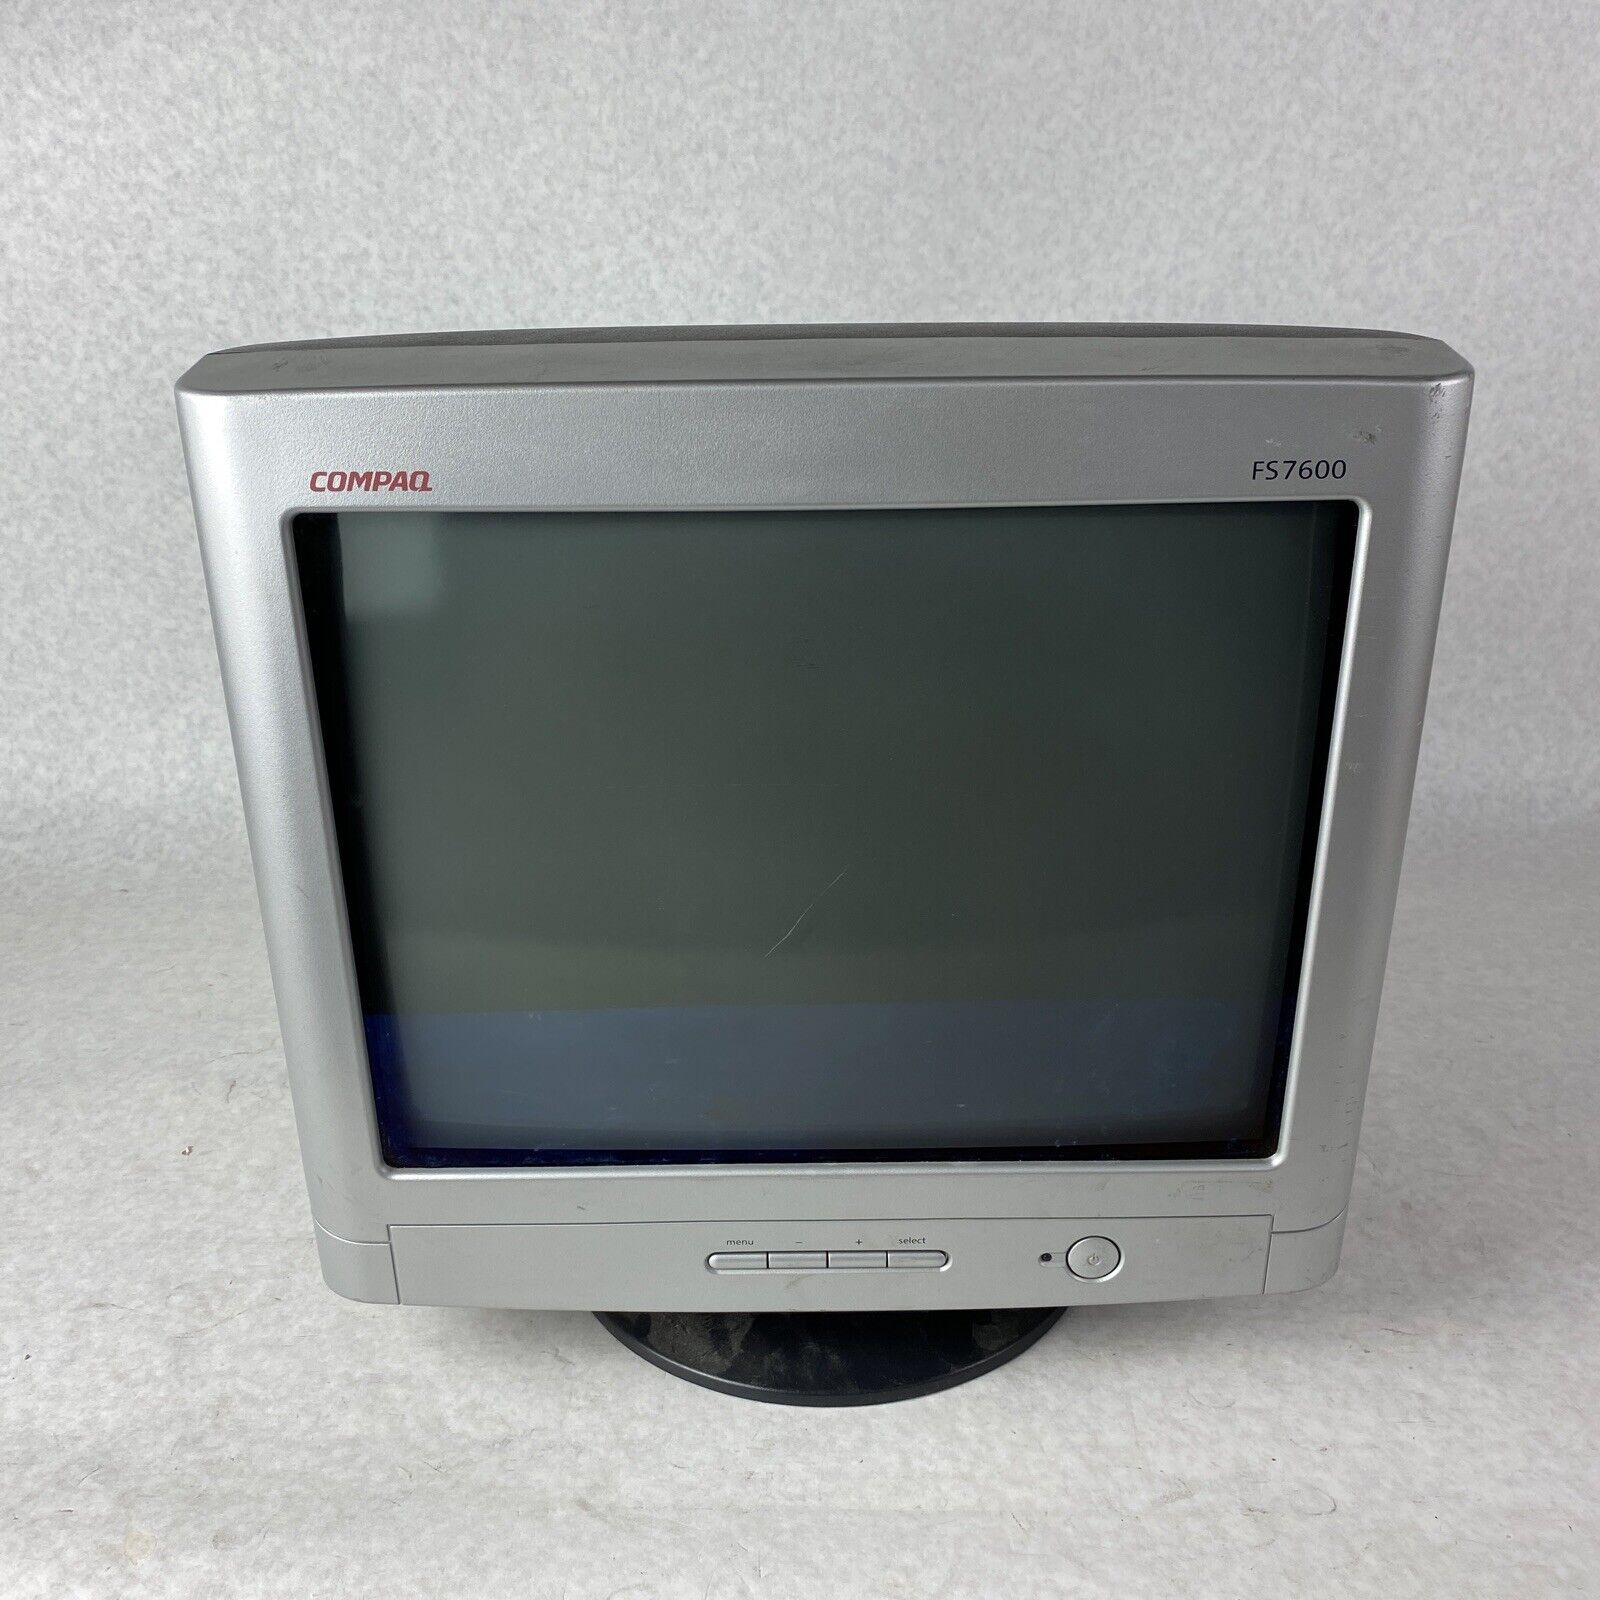 HP Compaq FS7600 17" Flat Screen CRT Monitor Display -Tested & Working